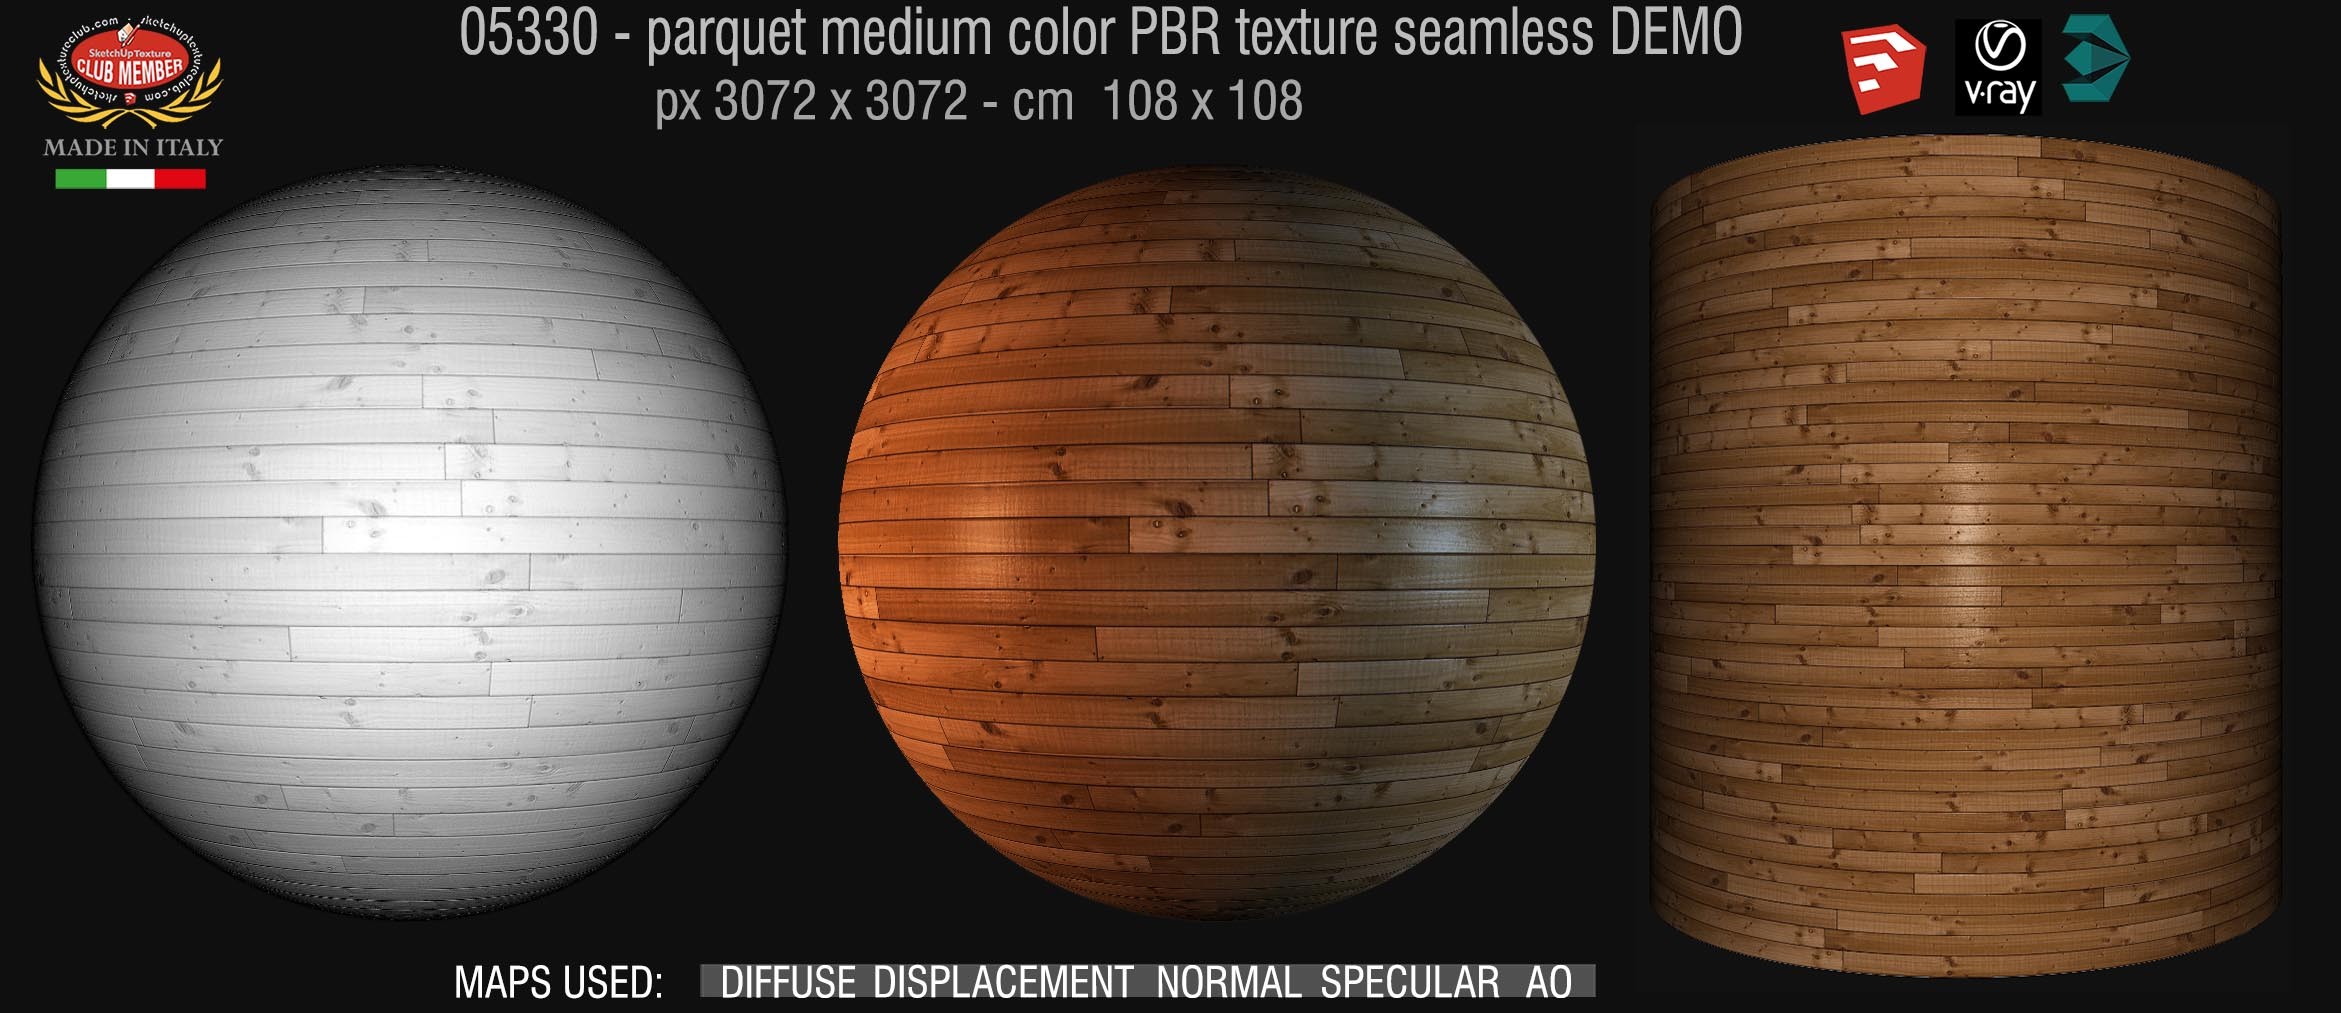 05330 parquet medium color PBR texture seamless DEMO